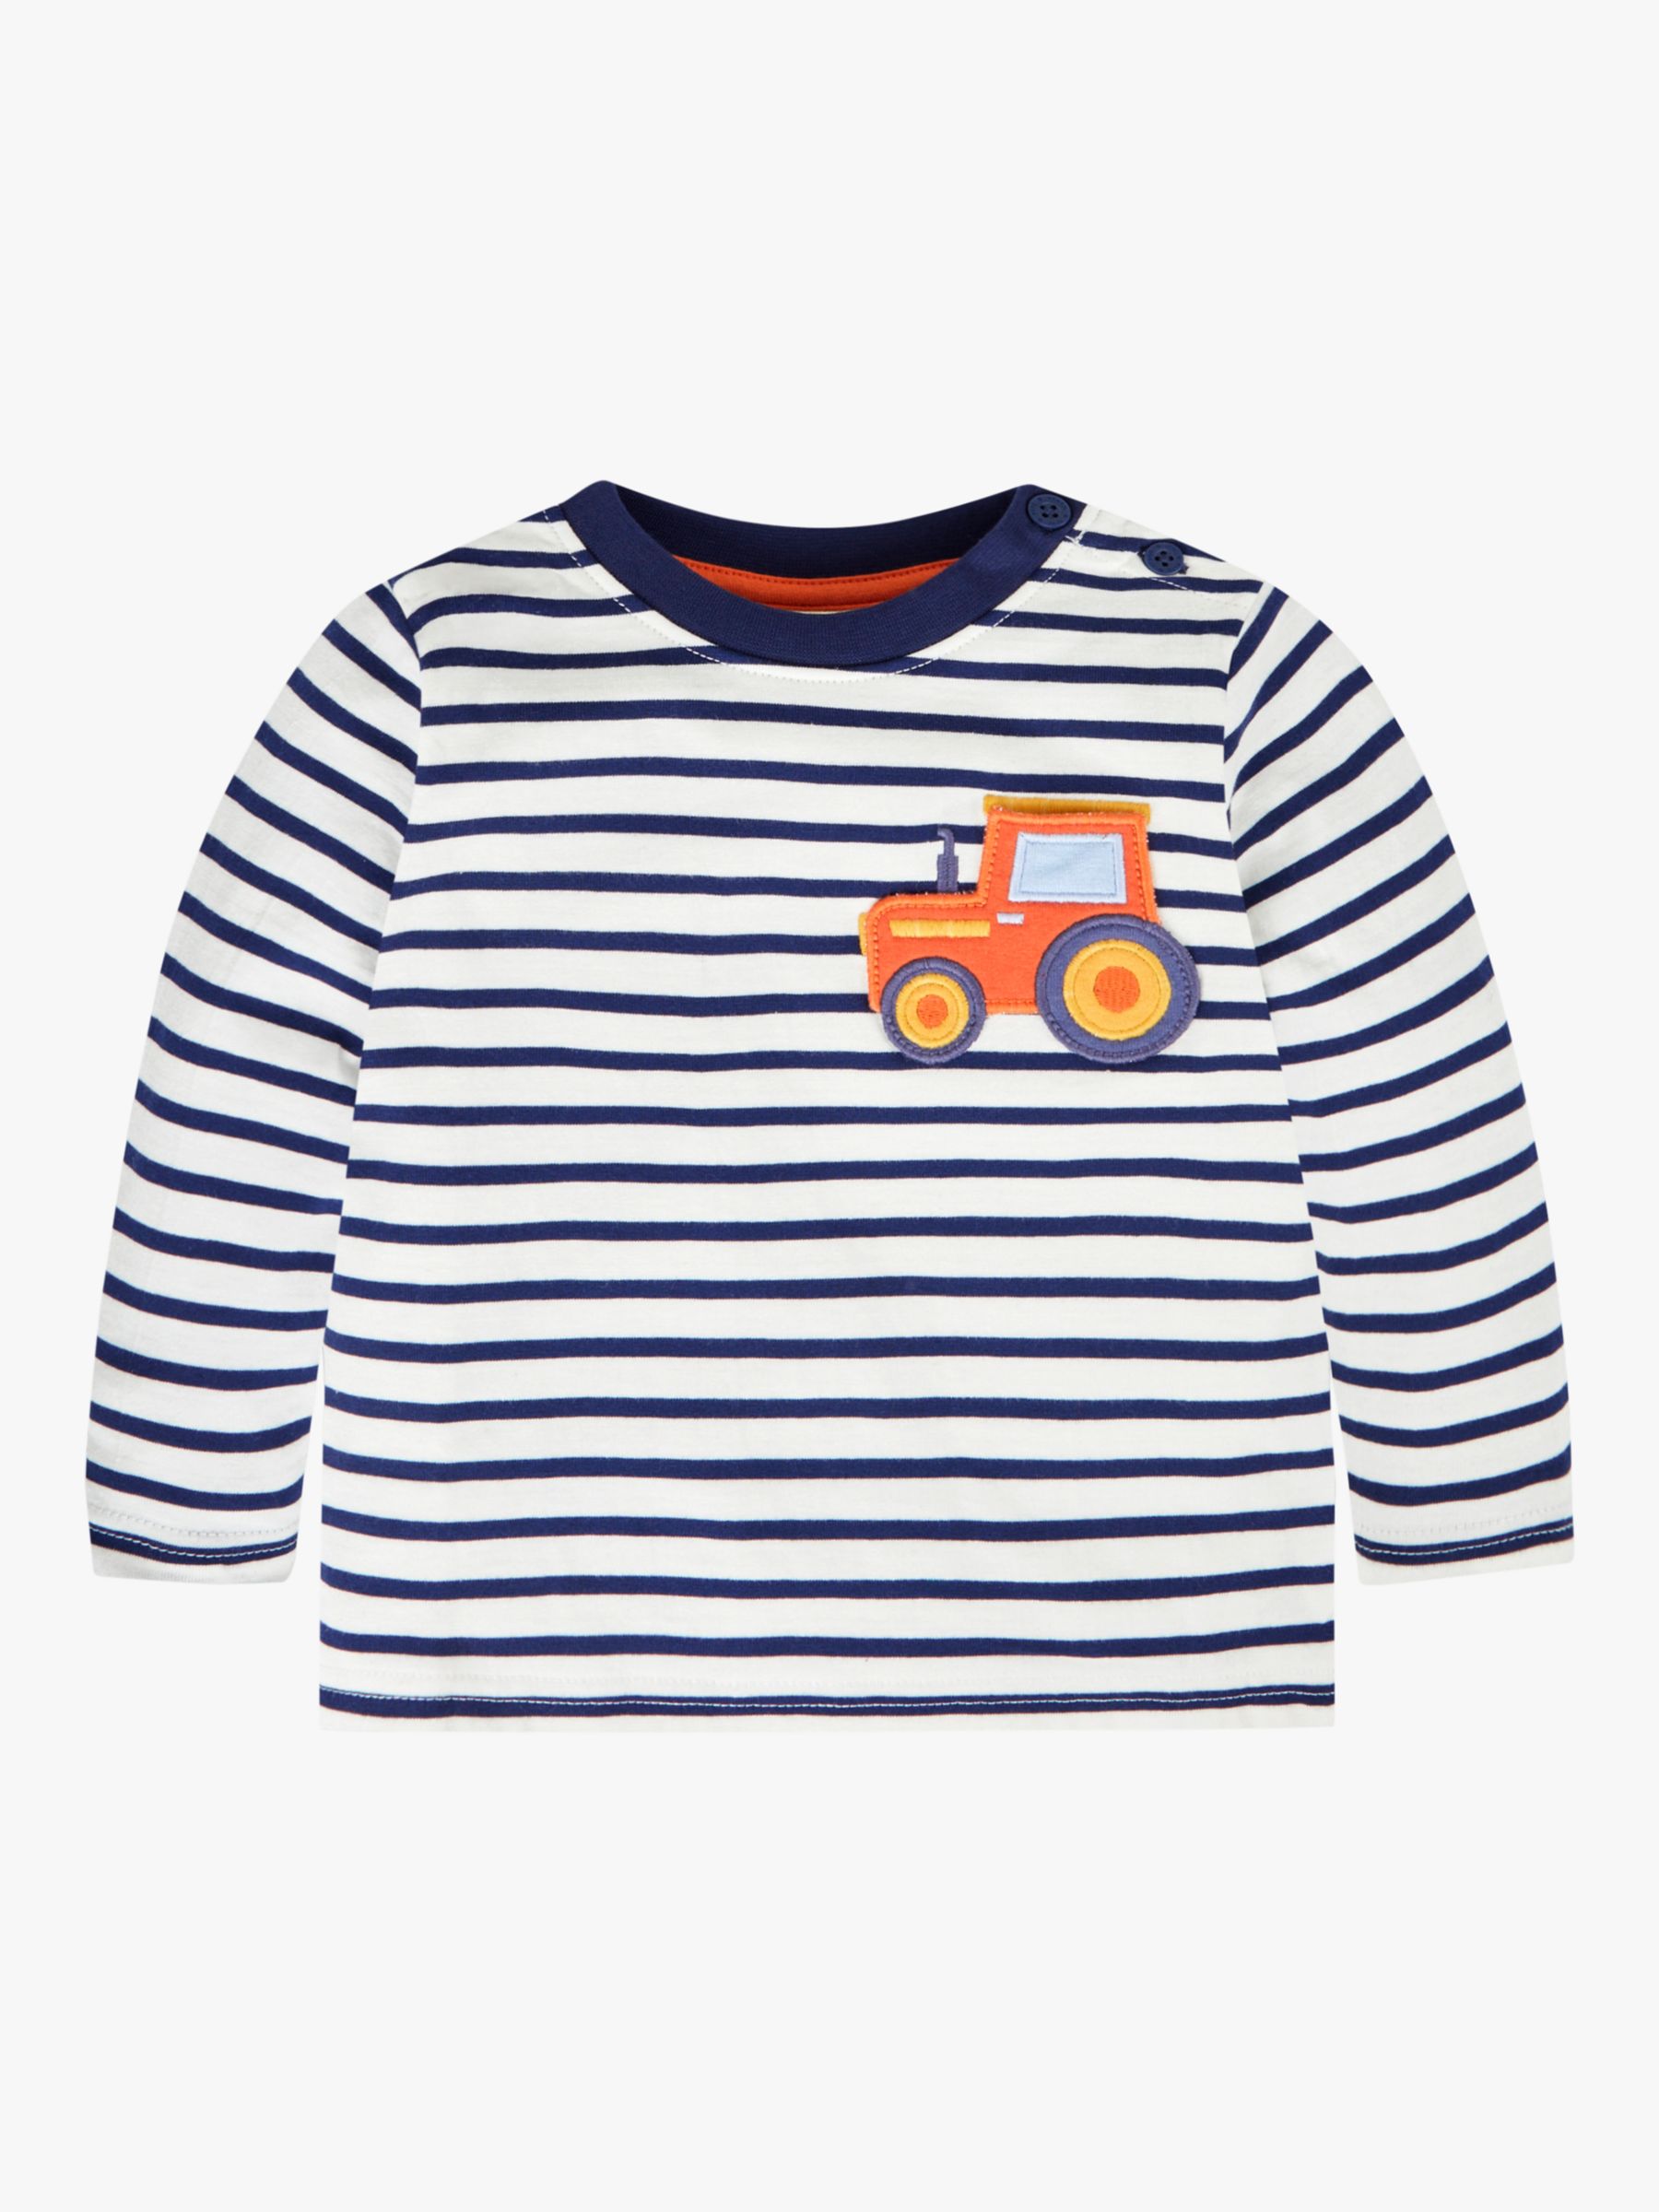 Buy JoJo Maman Bébé Kids' Tractor Striped T-Shirt, White/Navy Online at johnlewis.com